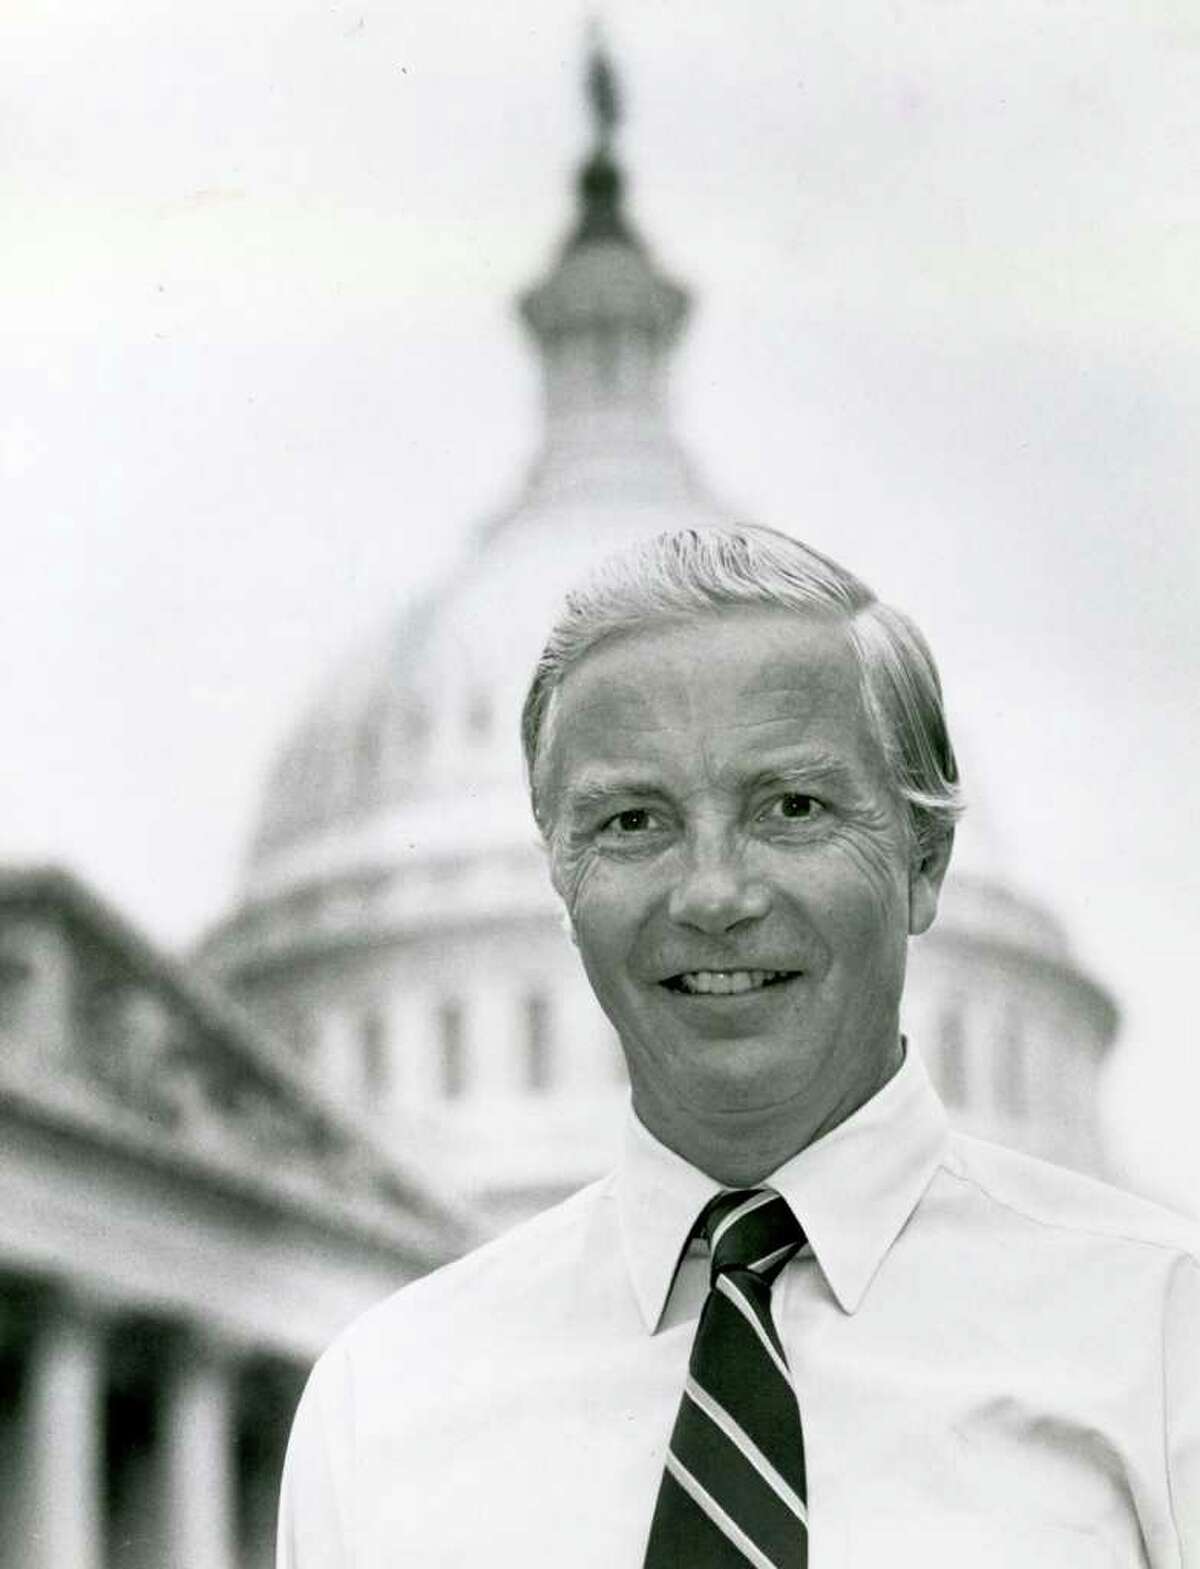 Congressman William Ratchford photographed in Washington in April 1979. Photo taken by News-Times photographer Stephen Szurlej.